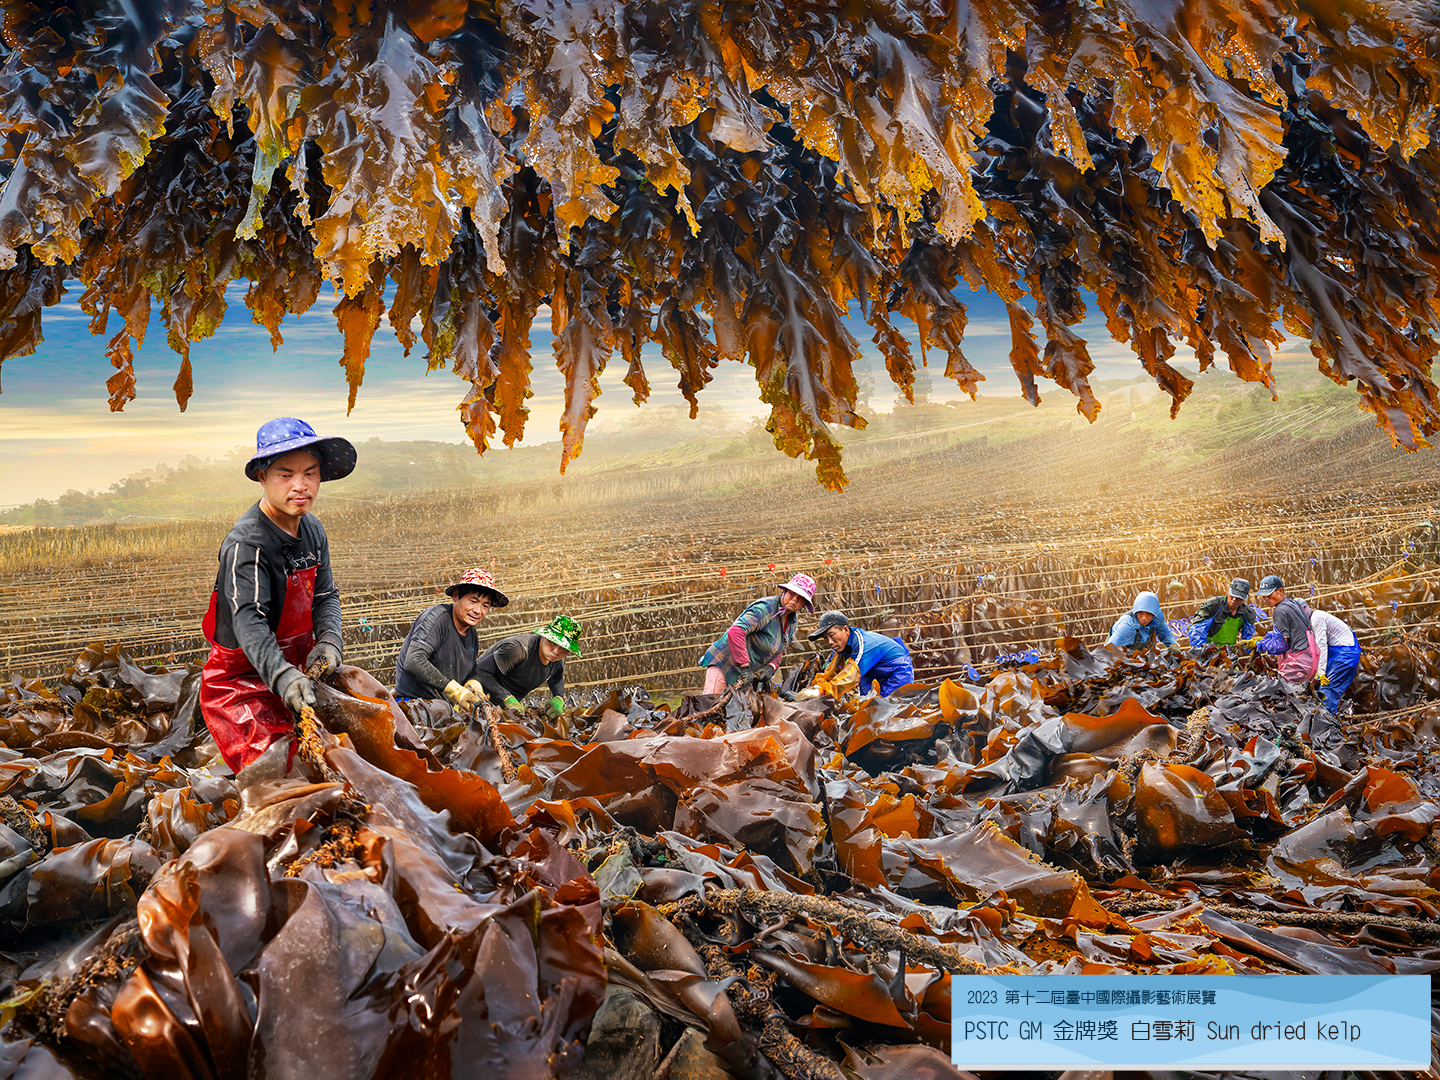 PSTC GM 金牌獎 白雪莉 Sun dried kelp